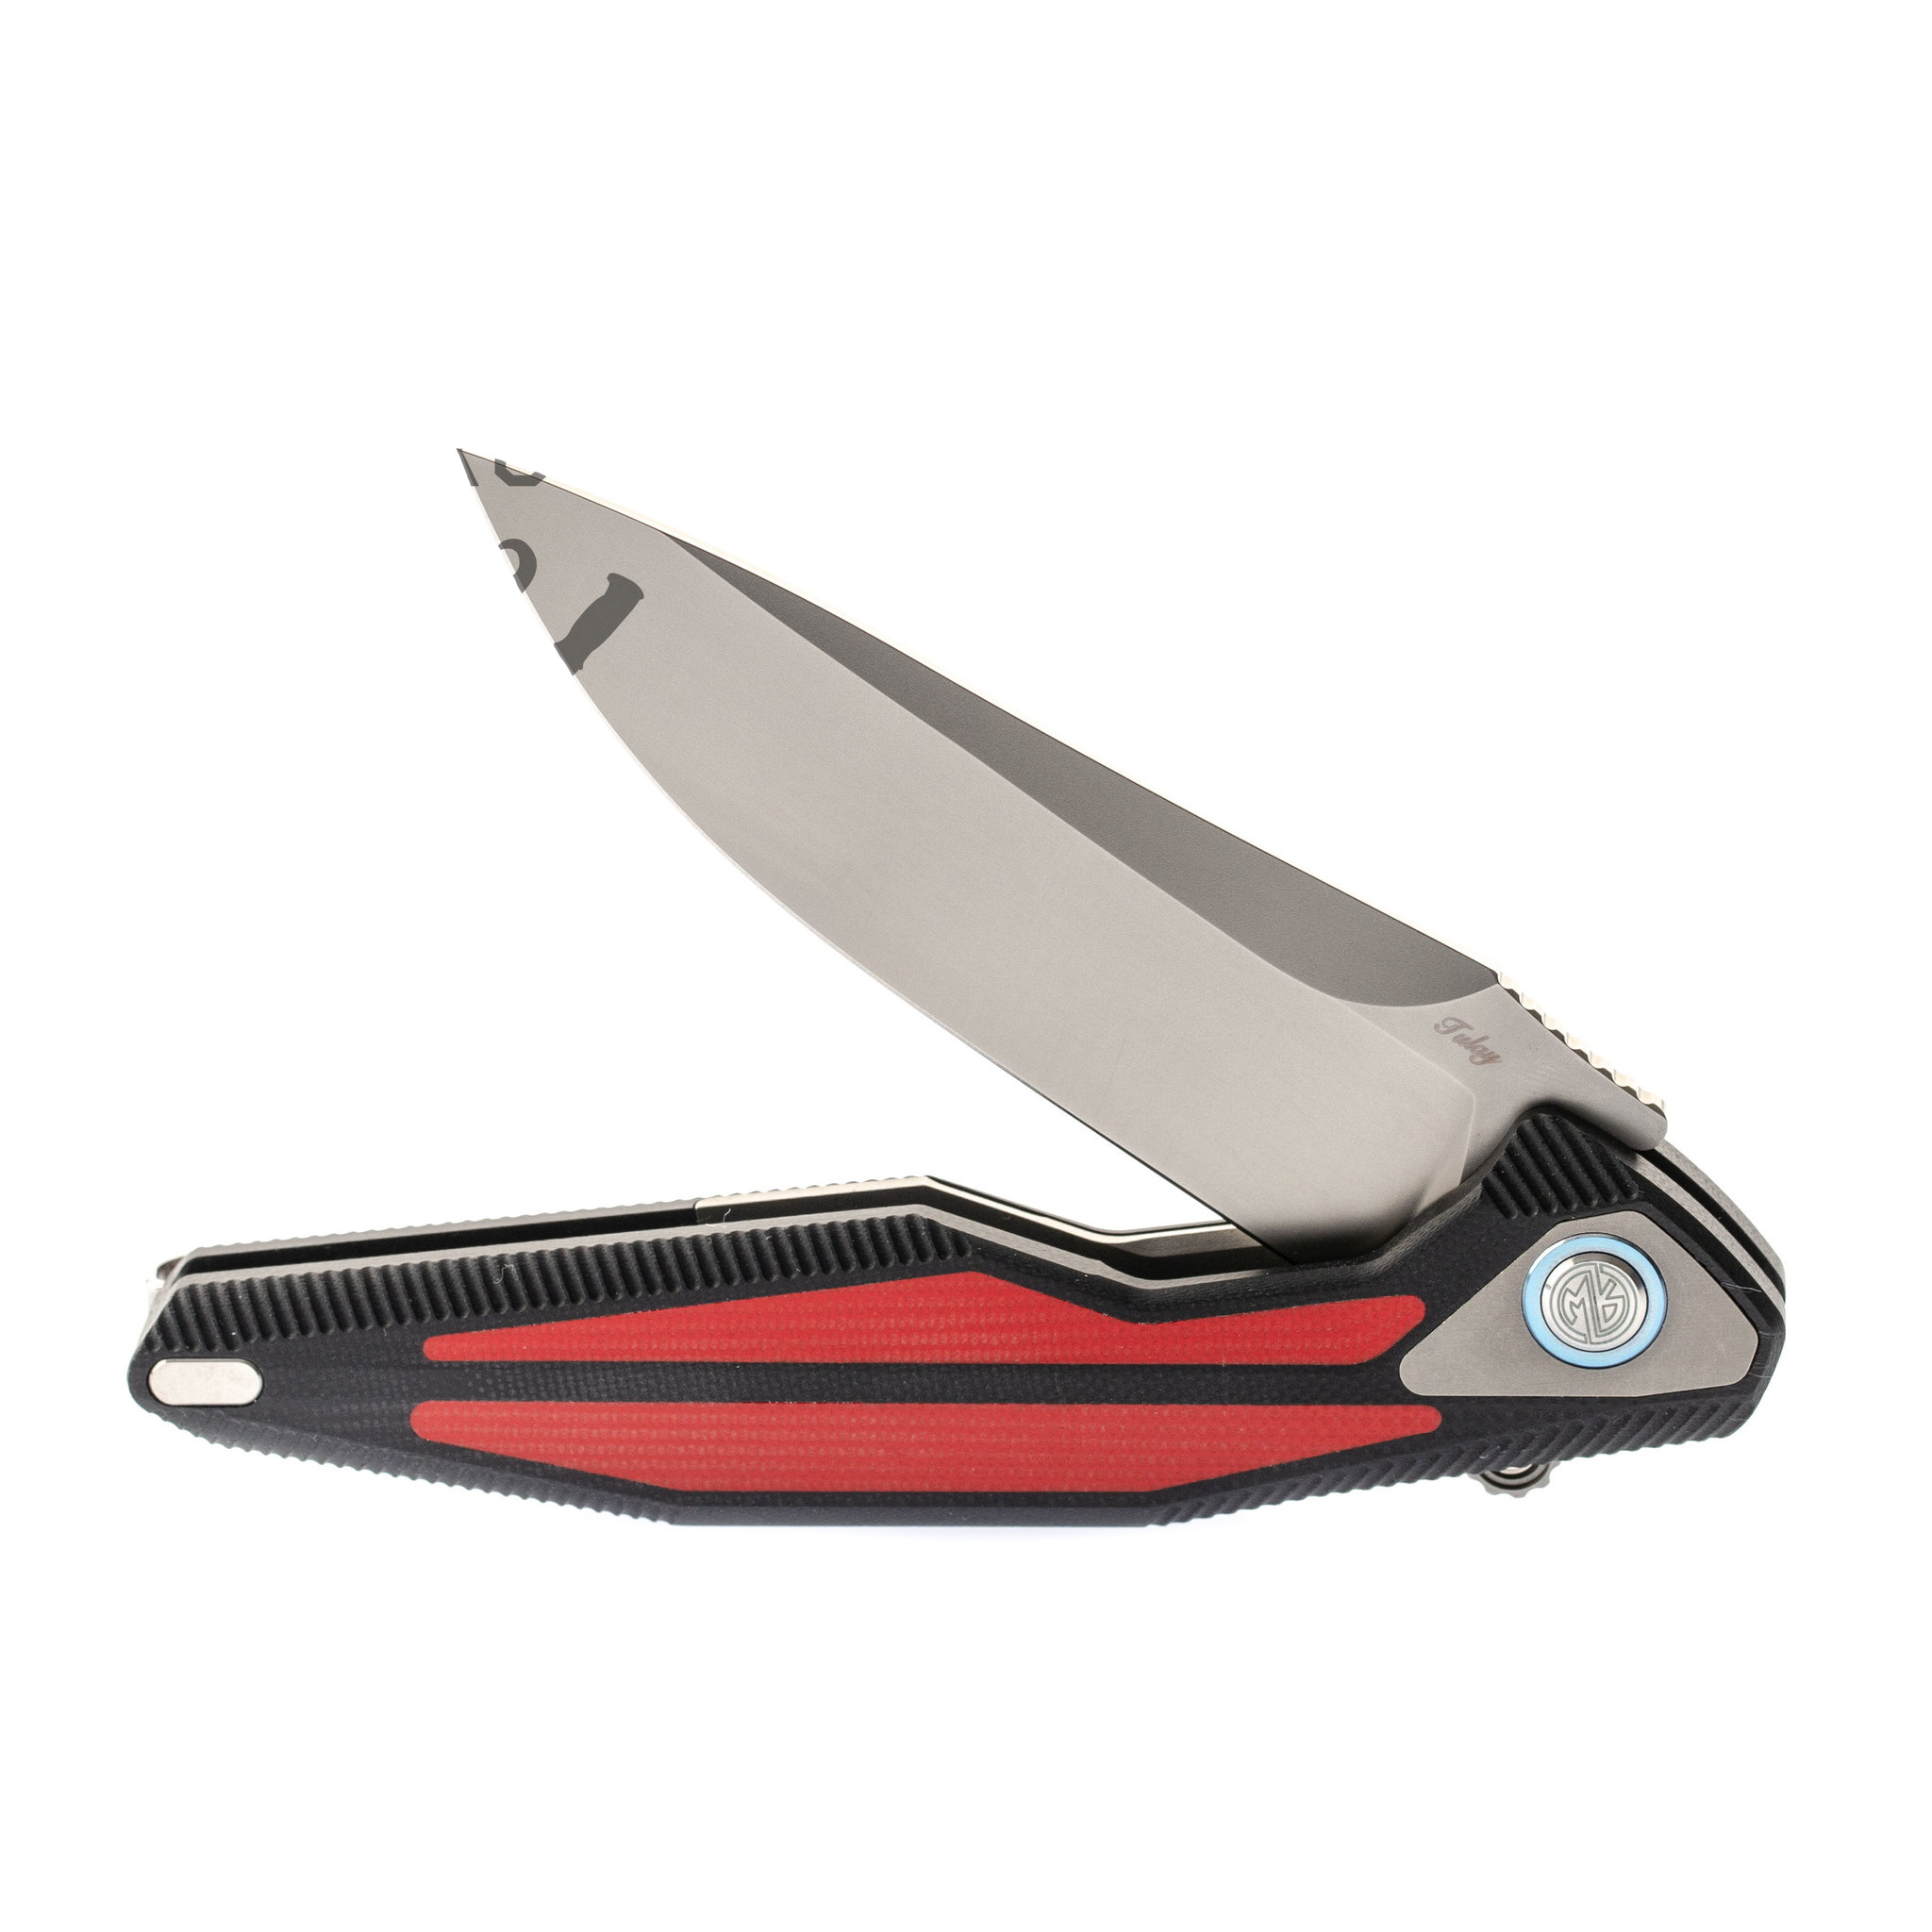 Нож складной Tulay Rikeknife, сталь 154CM, Red G10 - фото 5